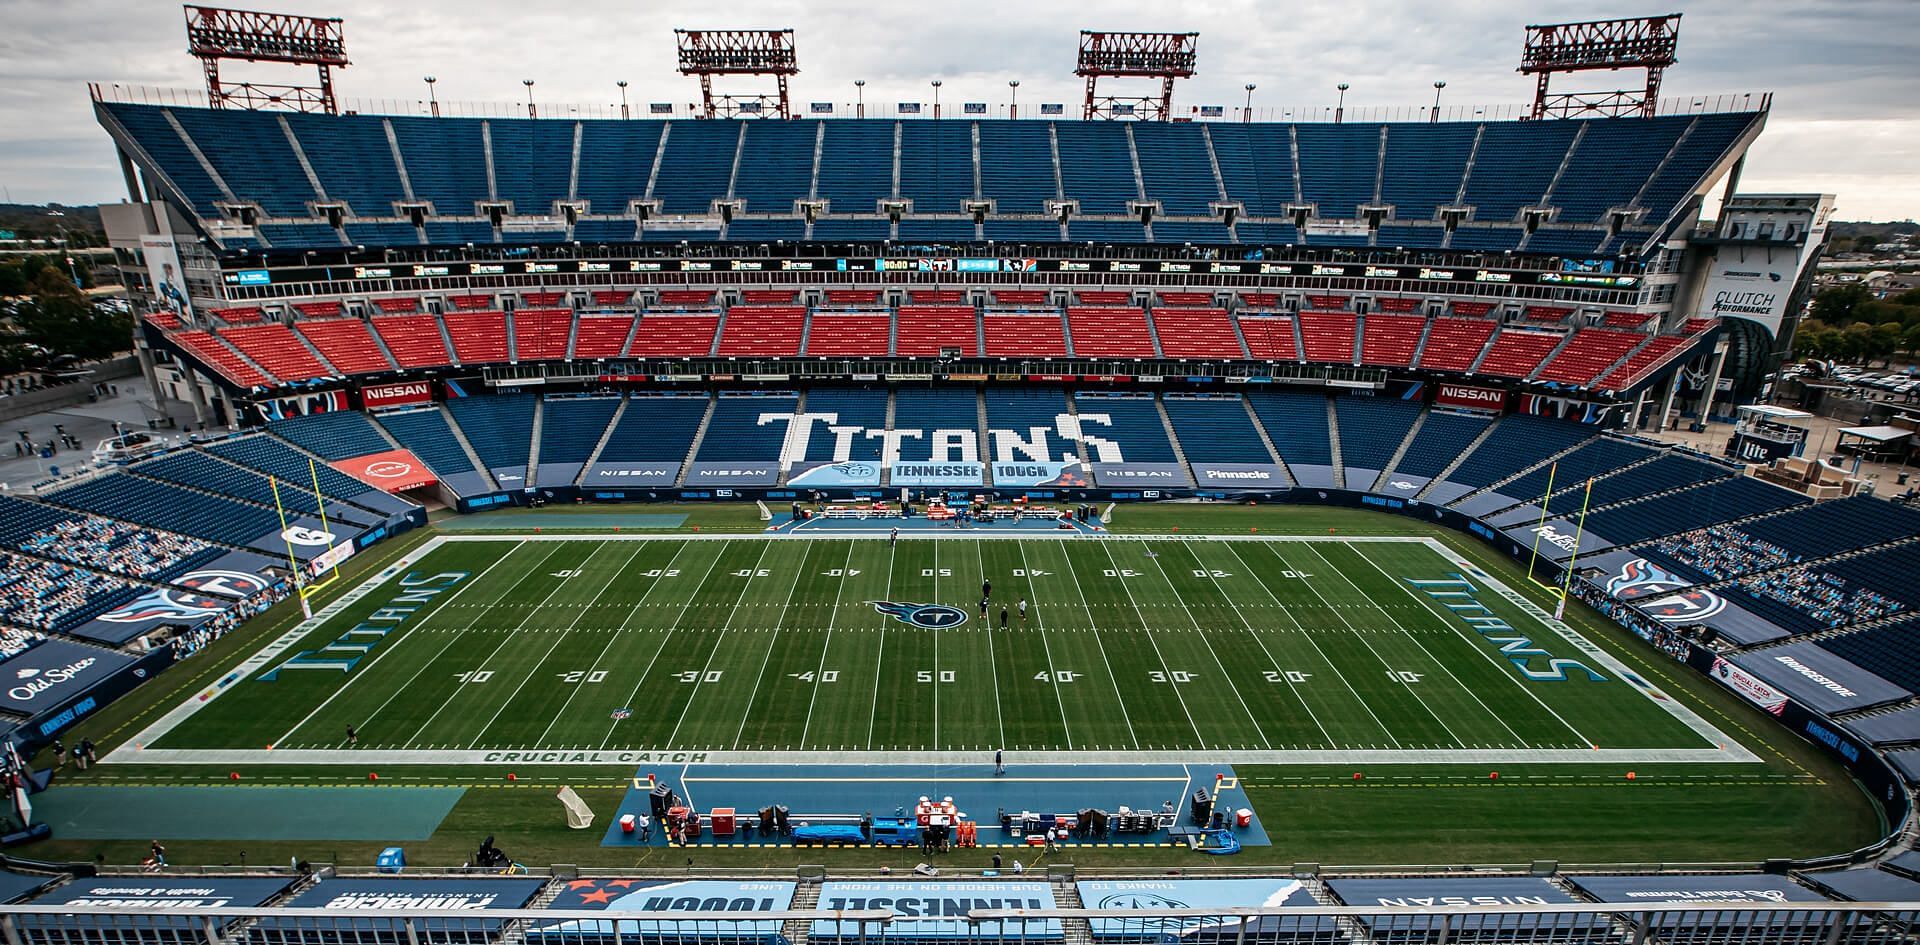 Nissan Stadium, home of the Tennessee Titans. Source: Nissan Stadium